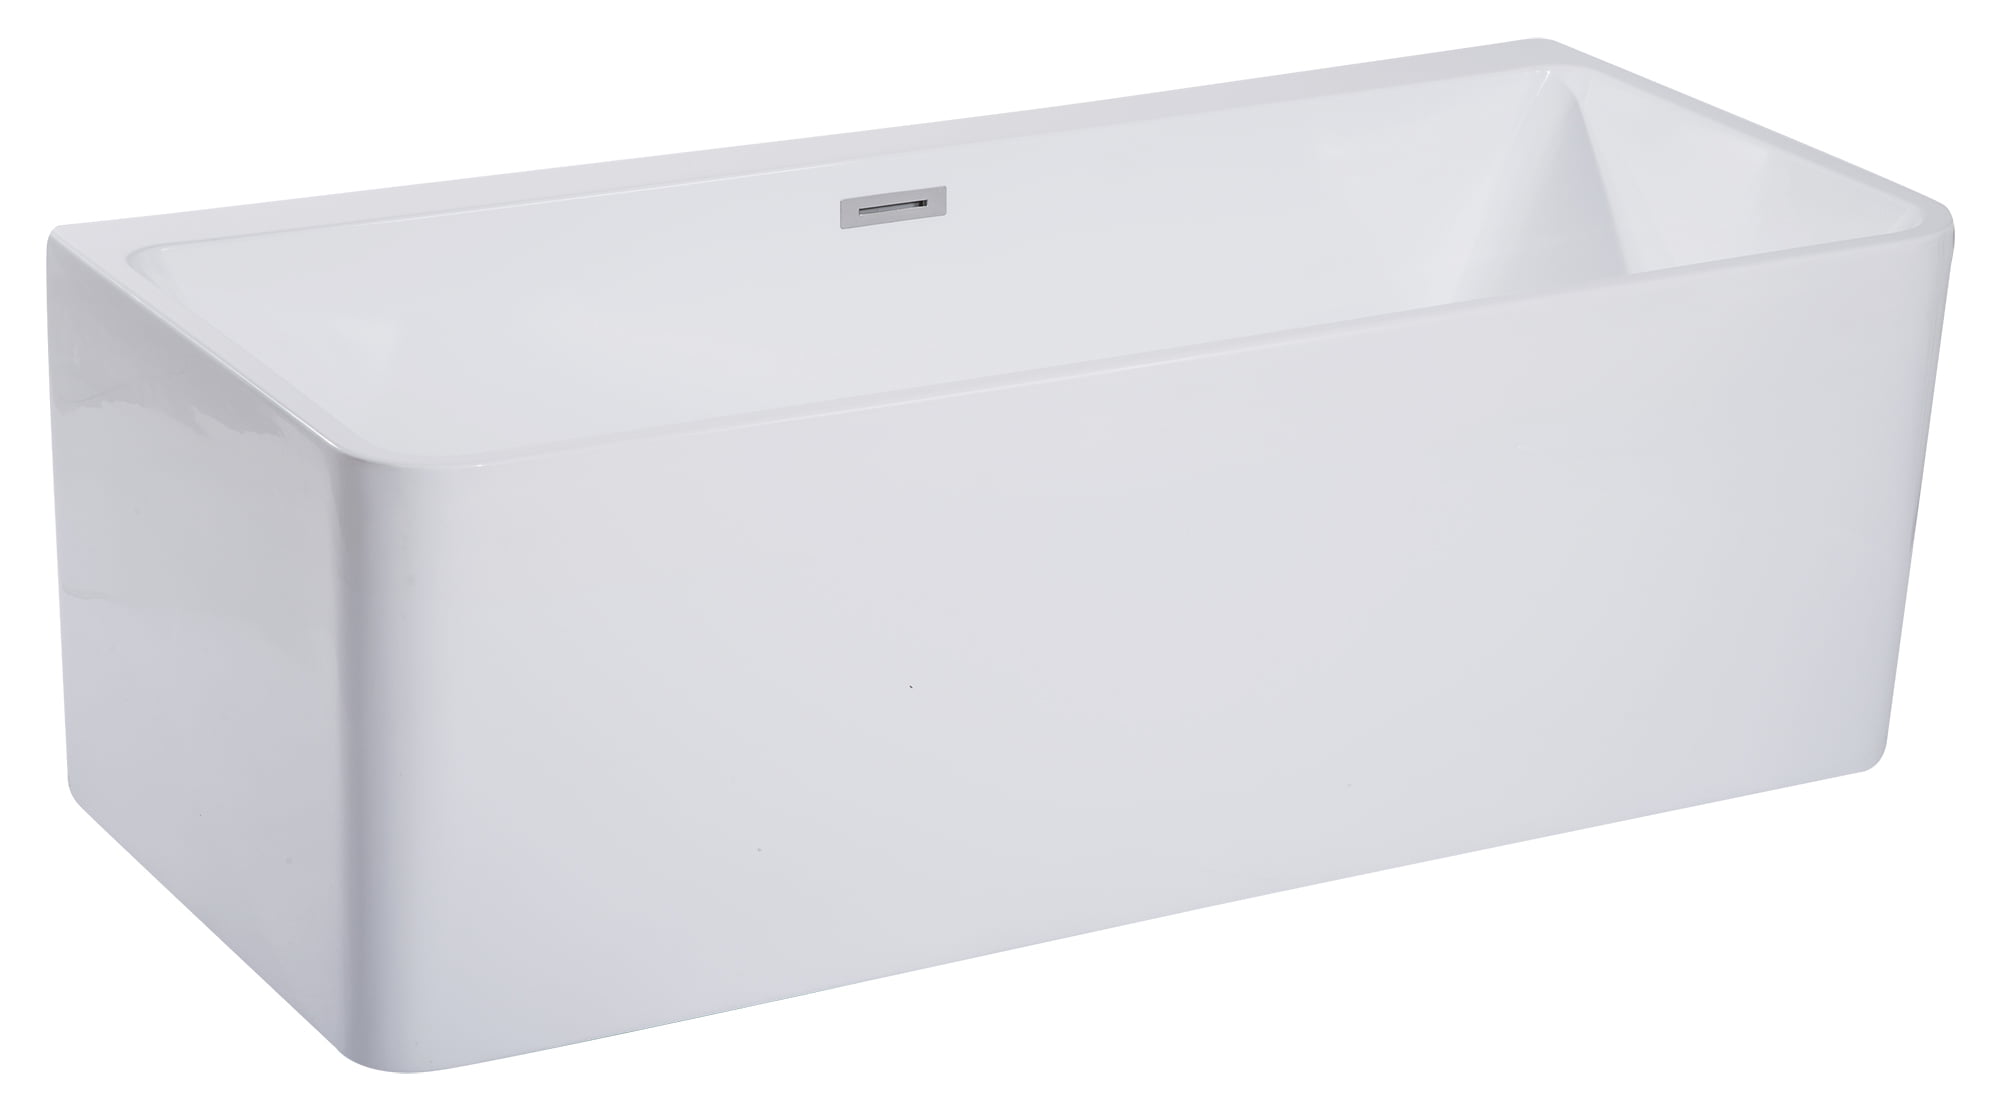 Ab8859 67 In. White Rectangular Acrylic Free Standing Soaking Bathtub